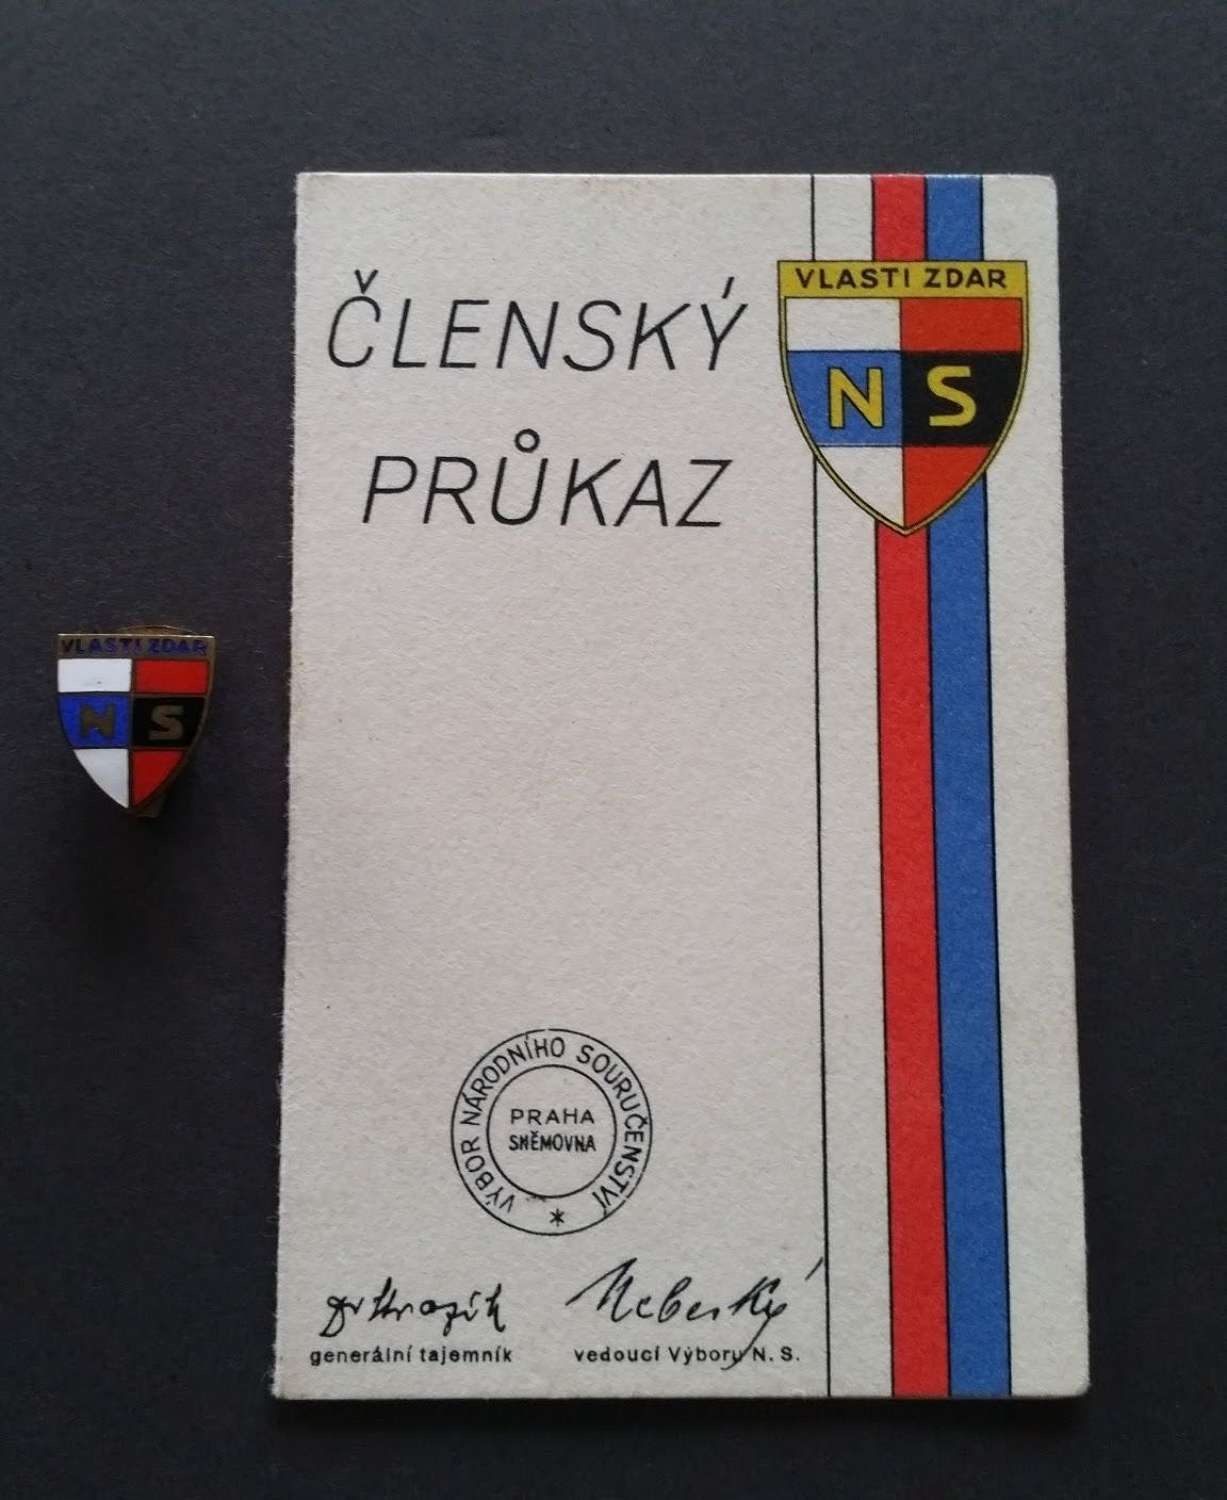 Vlasti Zaar 1940's Czech National Socialist Party Membership Booklet and Badge